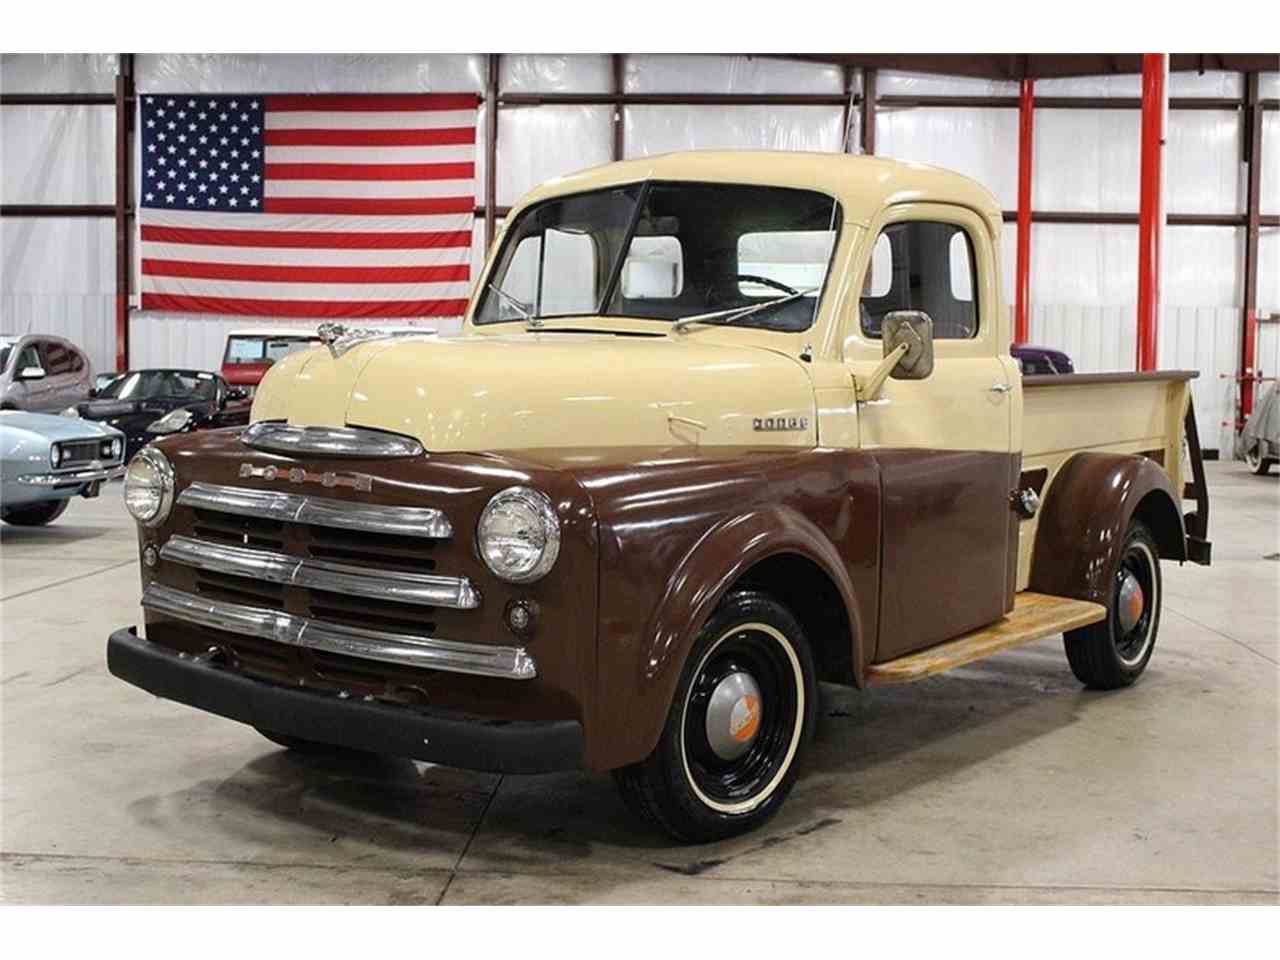 Vintage pickup truck values